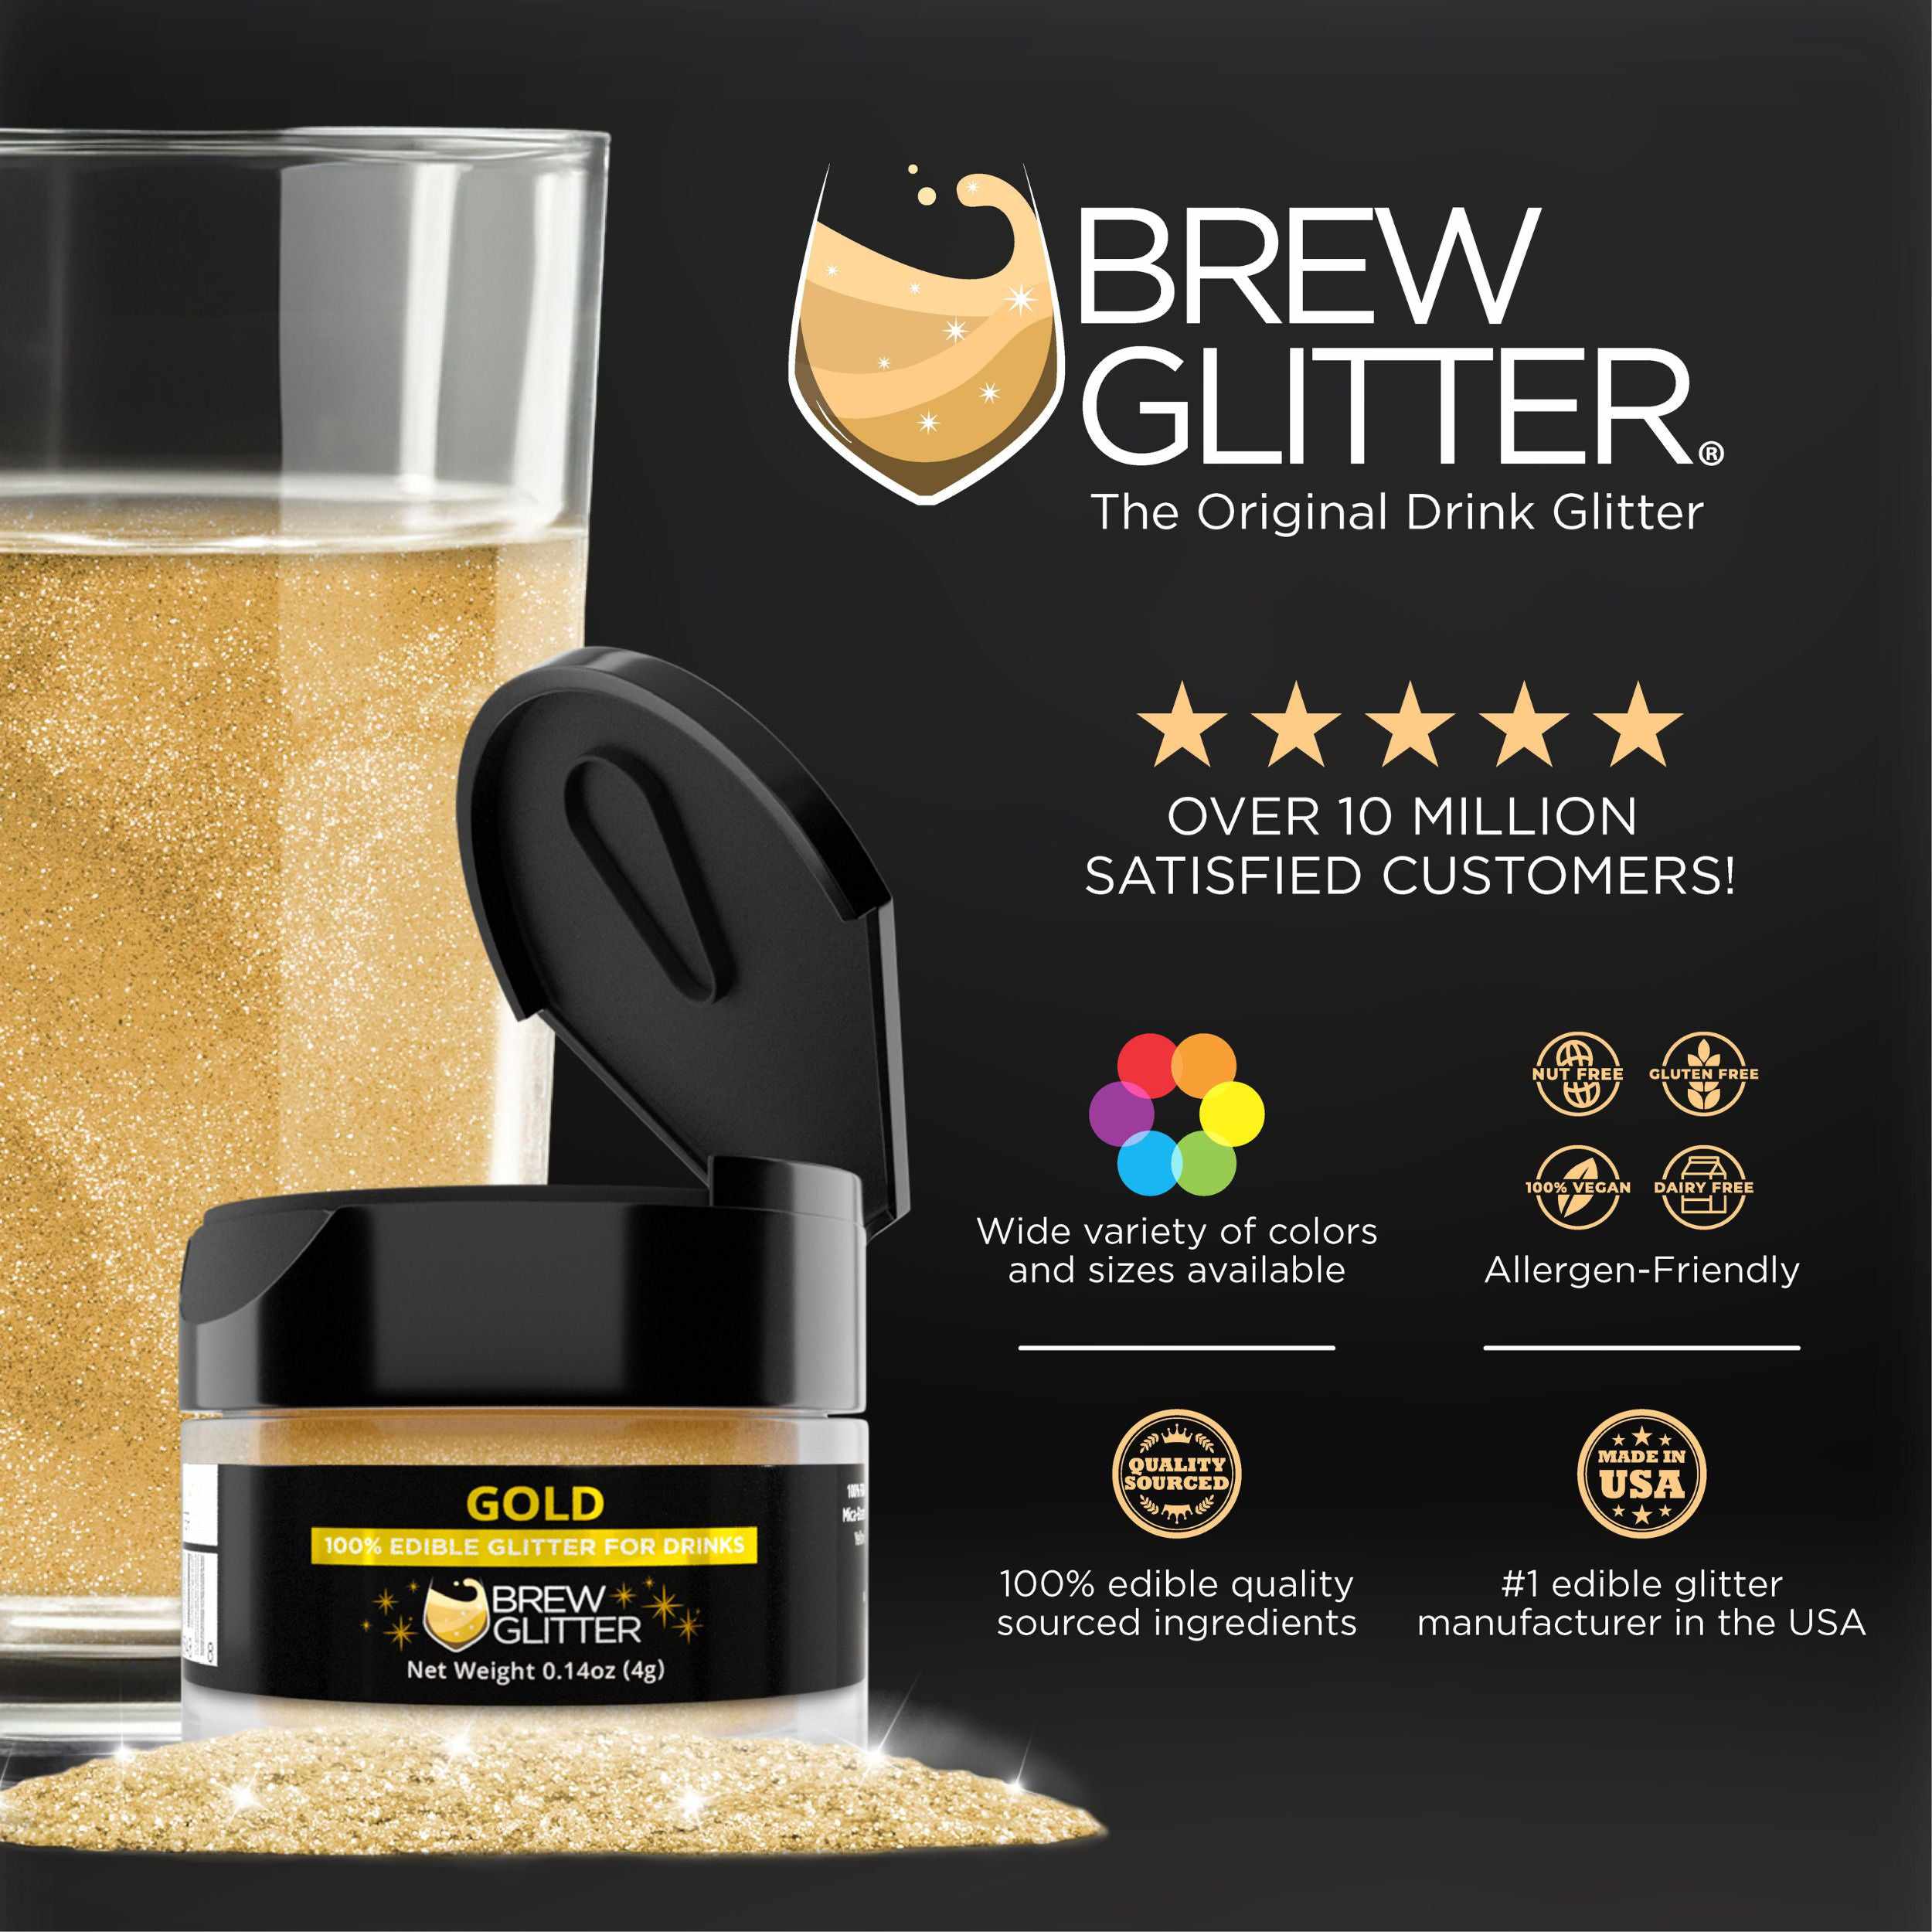 Gold Brew Glitter - Buy & Save 18% on 4g Gold Jar - Bakell